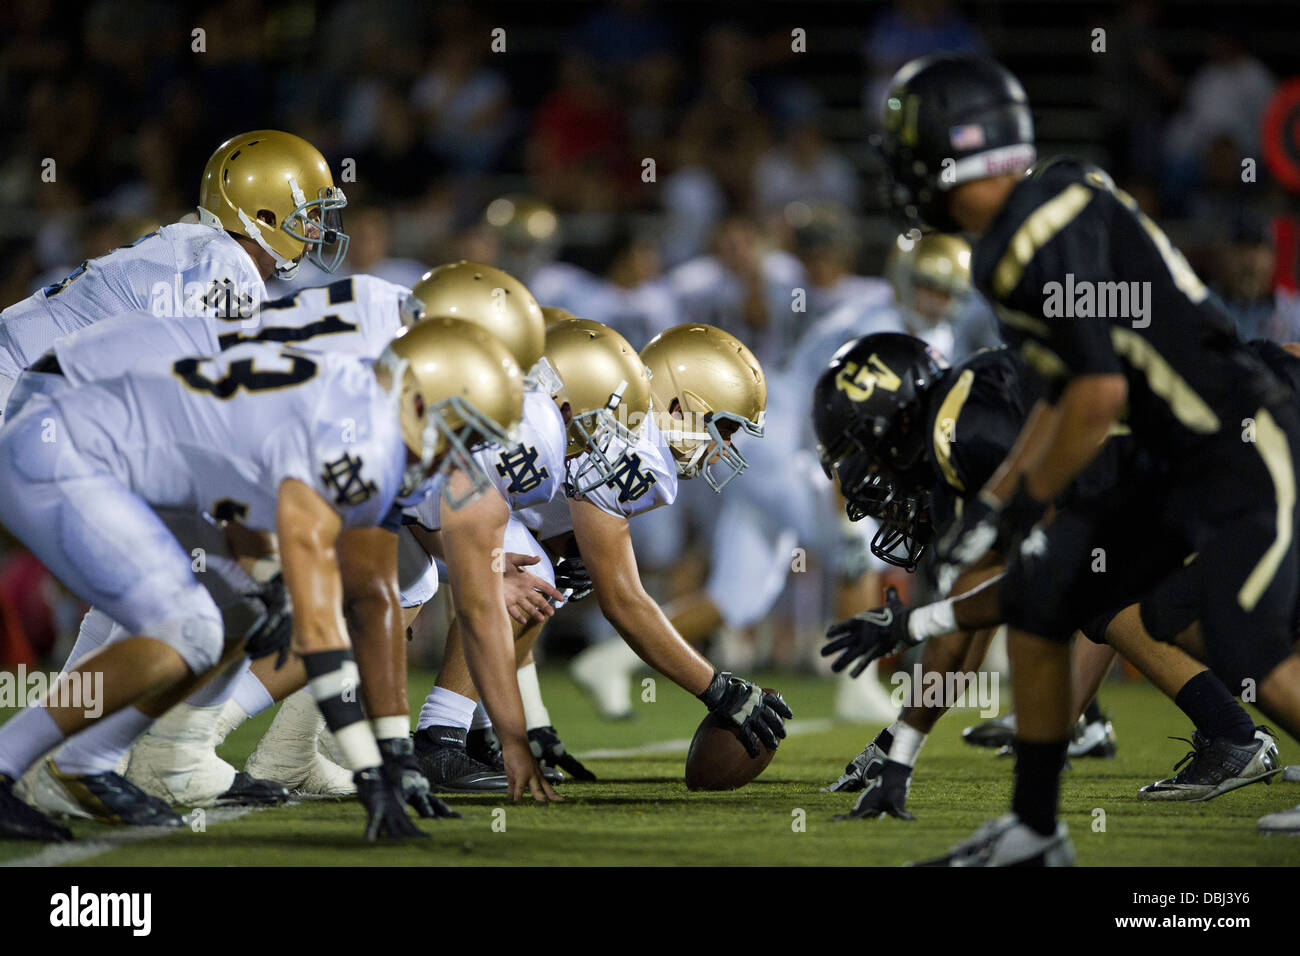 High school football game Stock Photo